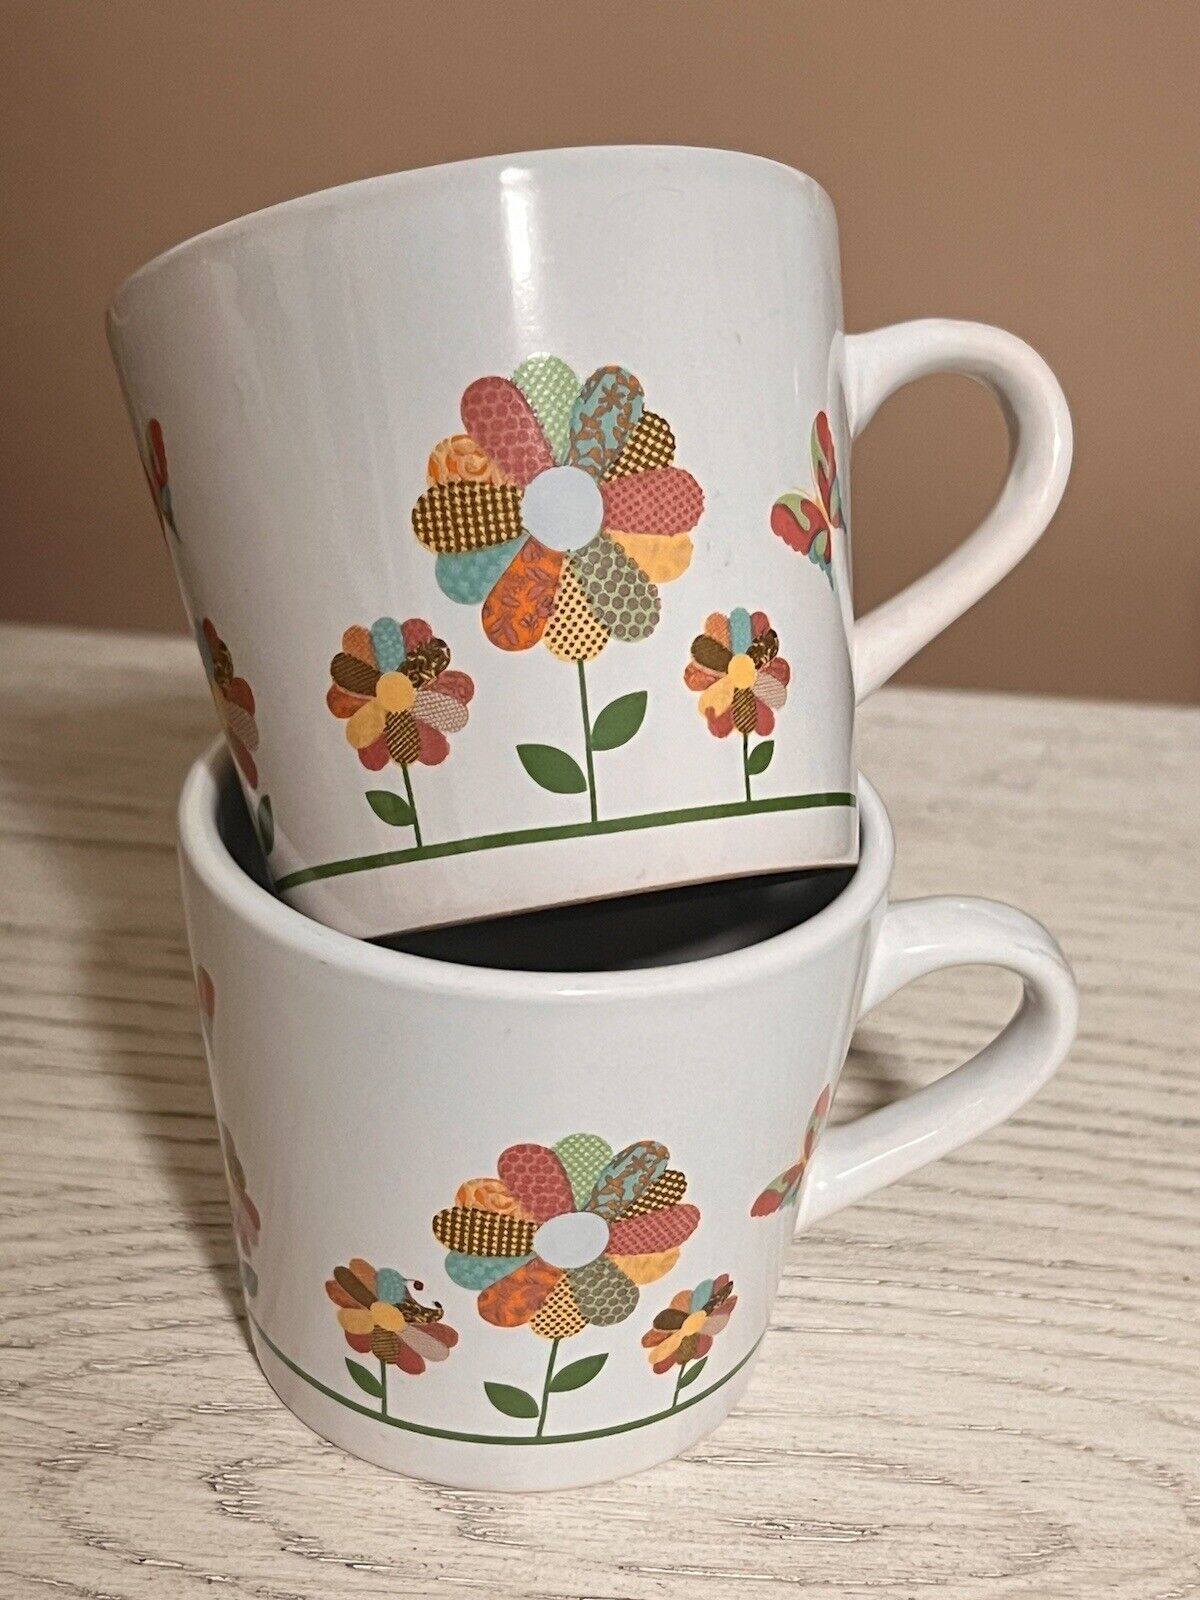 Trisa Patchwork Vintage Hippie Ceramic Mugs/Cups 7 oz Butterfly/Flower Power - 2